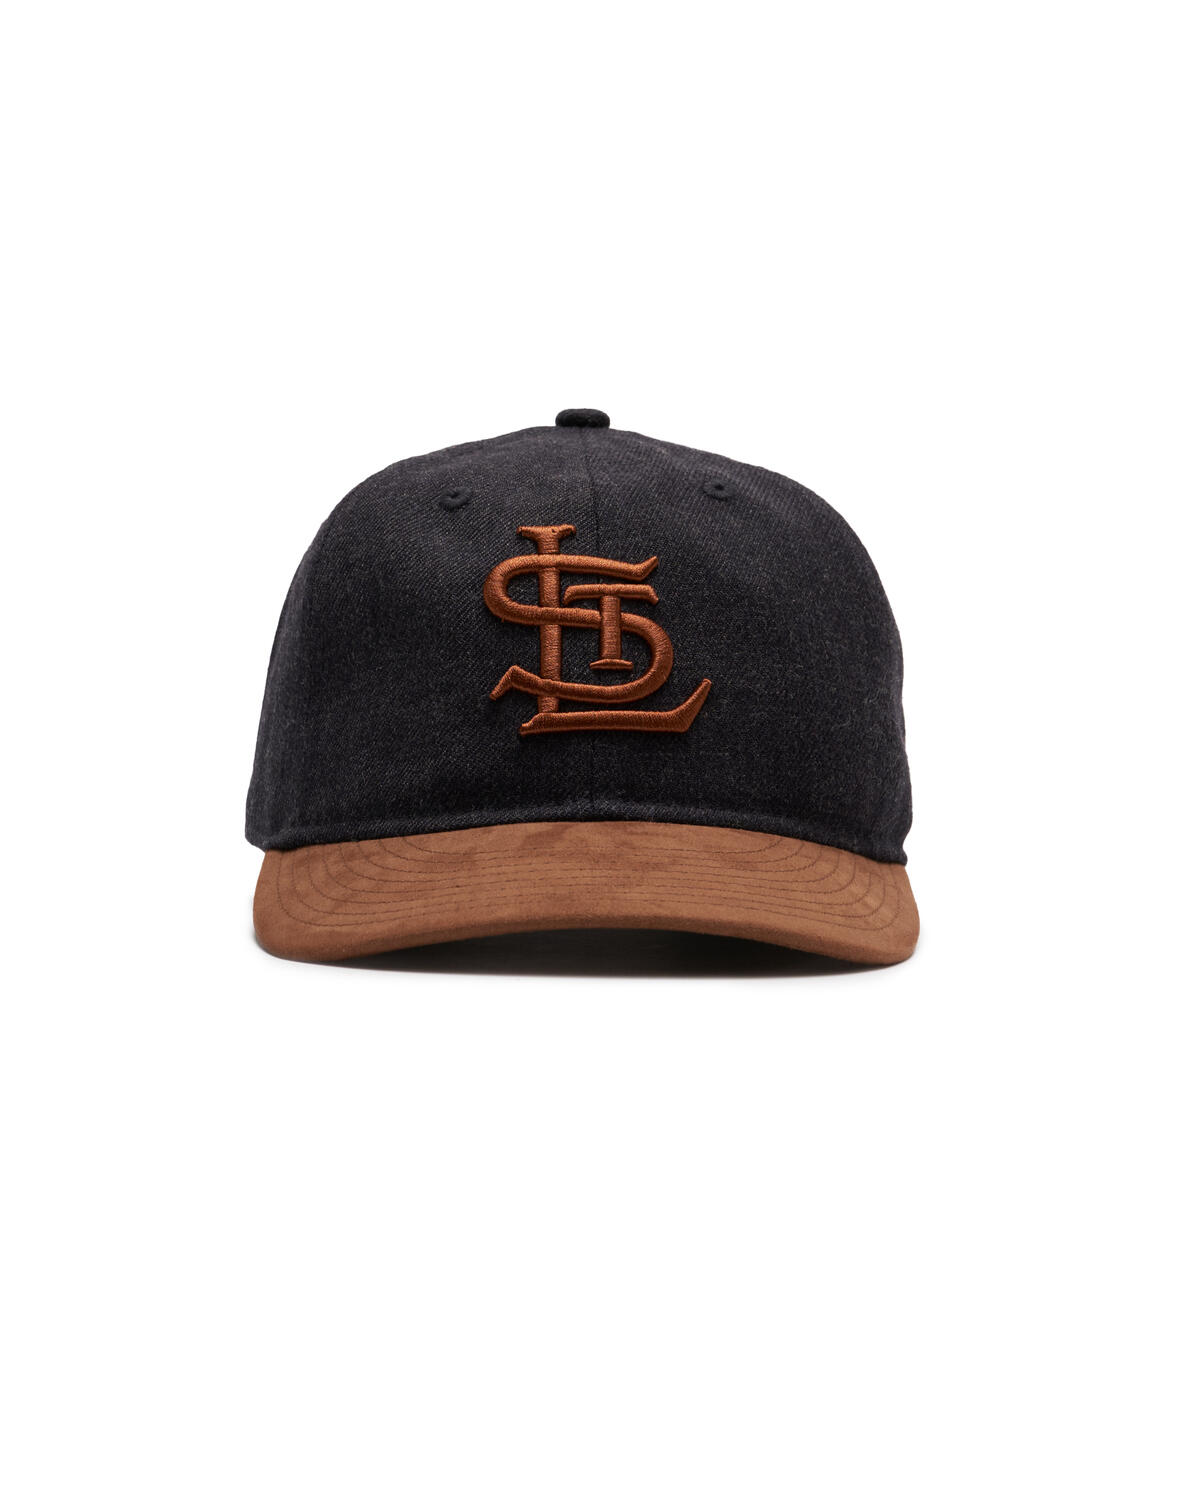 Men's Fanatics Branded Charcoal/Black St. Louis Cardinals Two-Tone Patch Snapback Hat